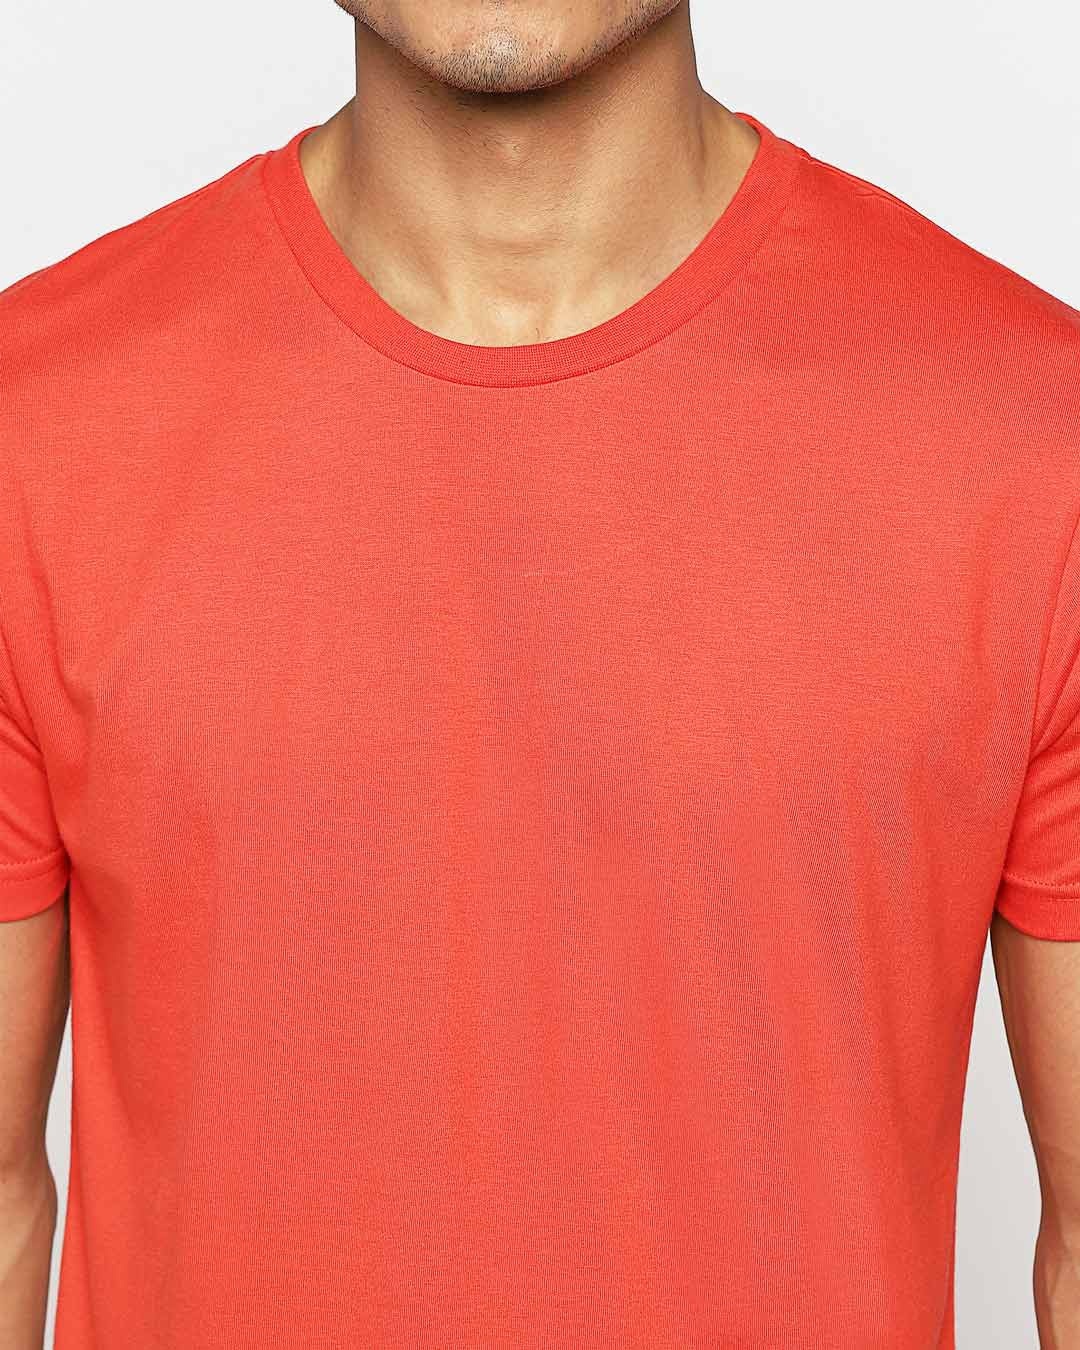 Shop Smoke Red Half Sleeve T-Shirt